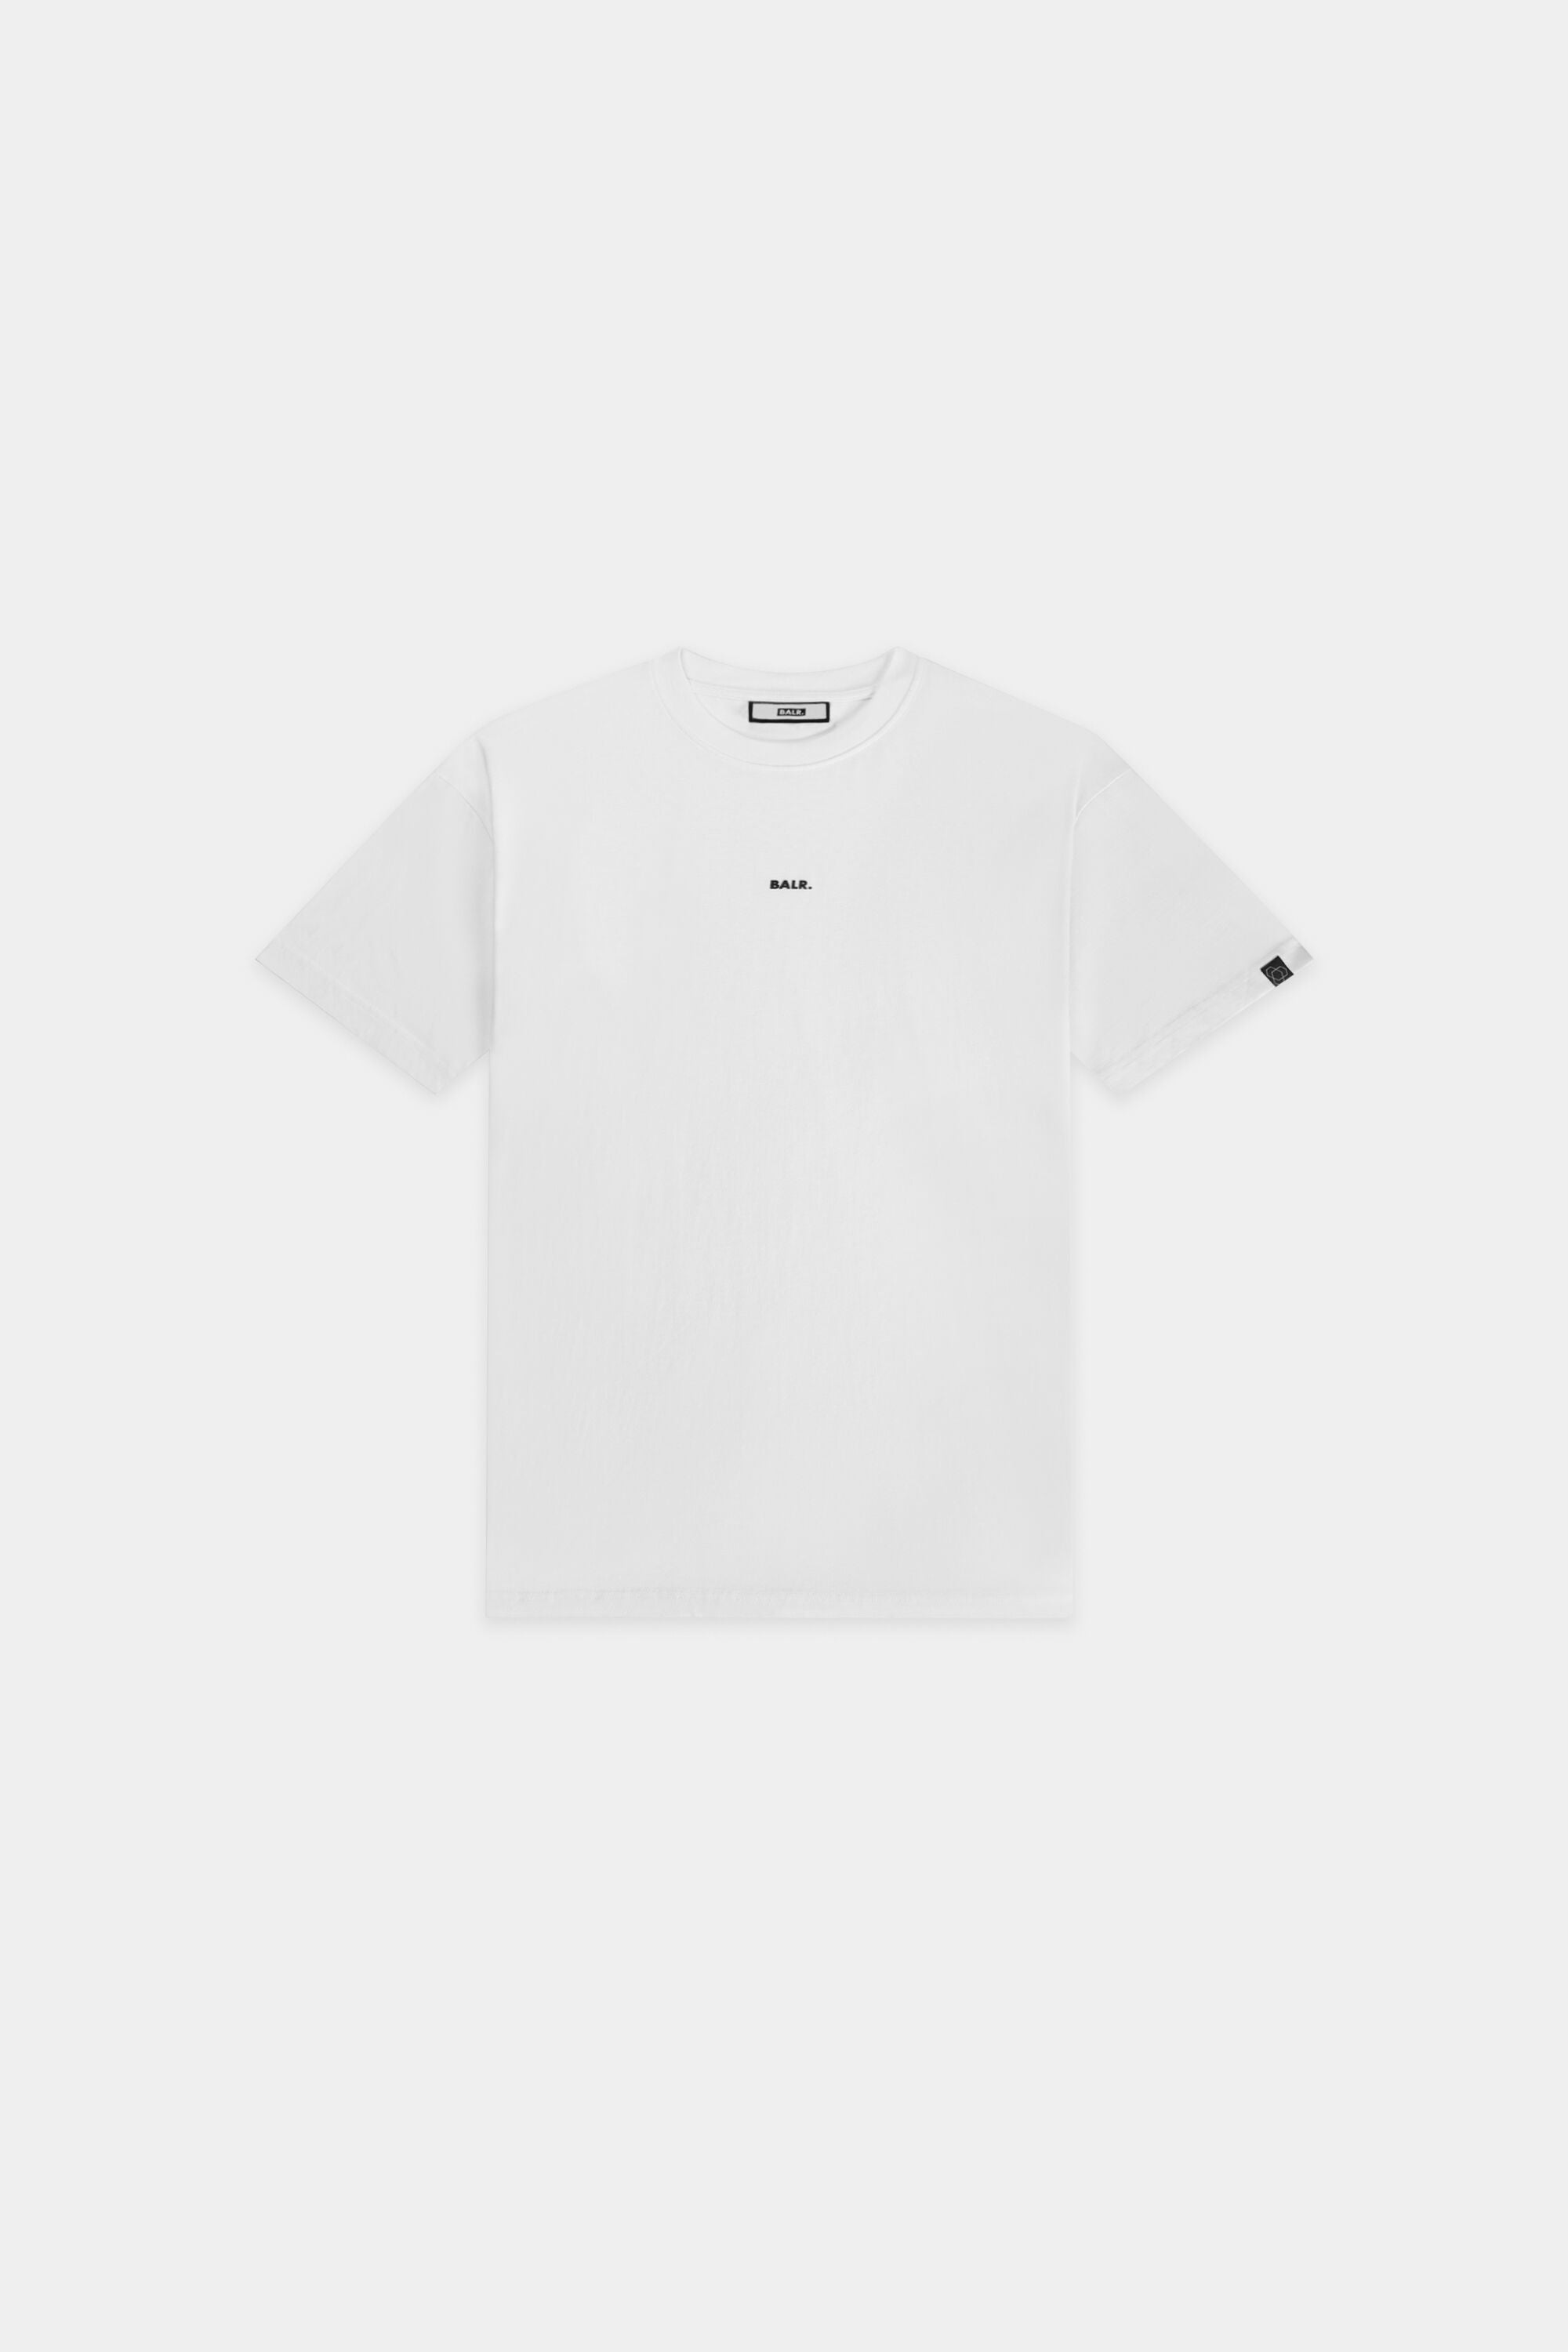 🏀 Get the HexTM Tank Shirt in white